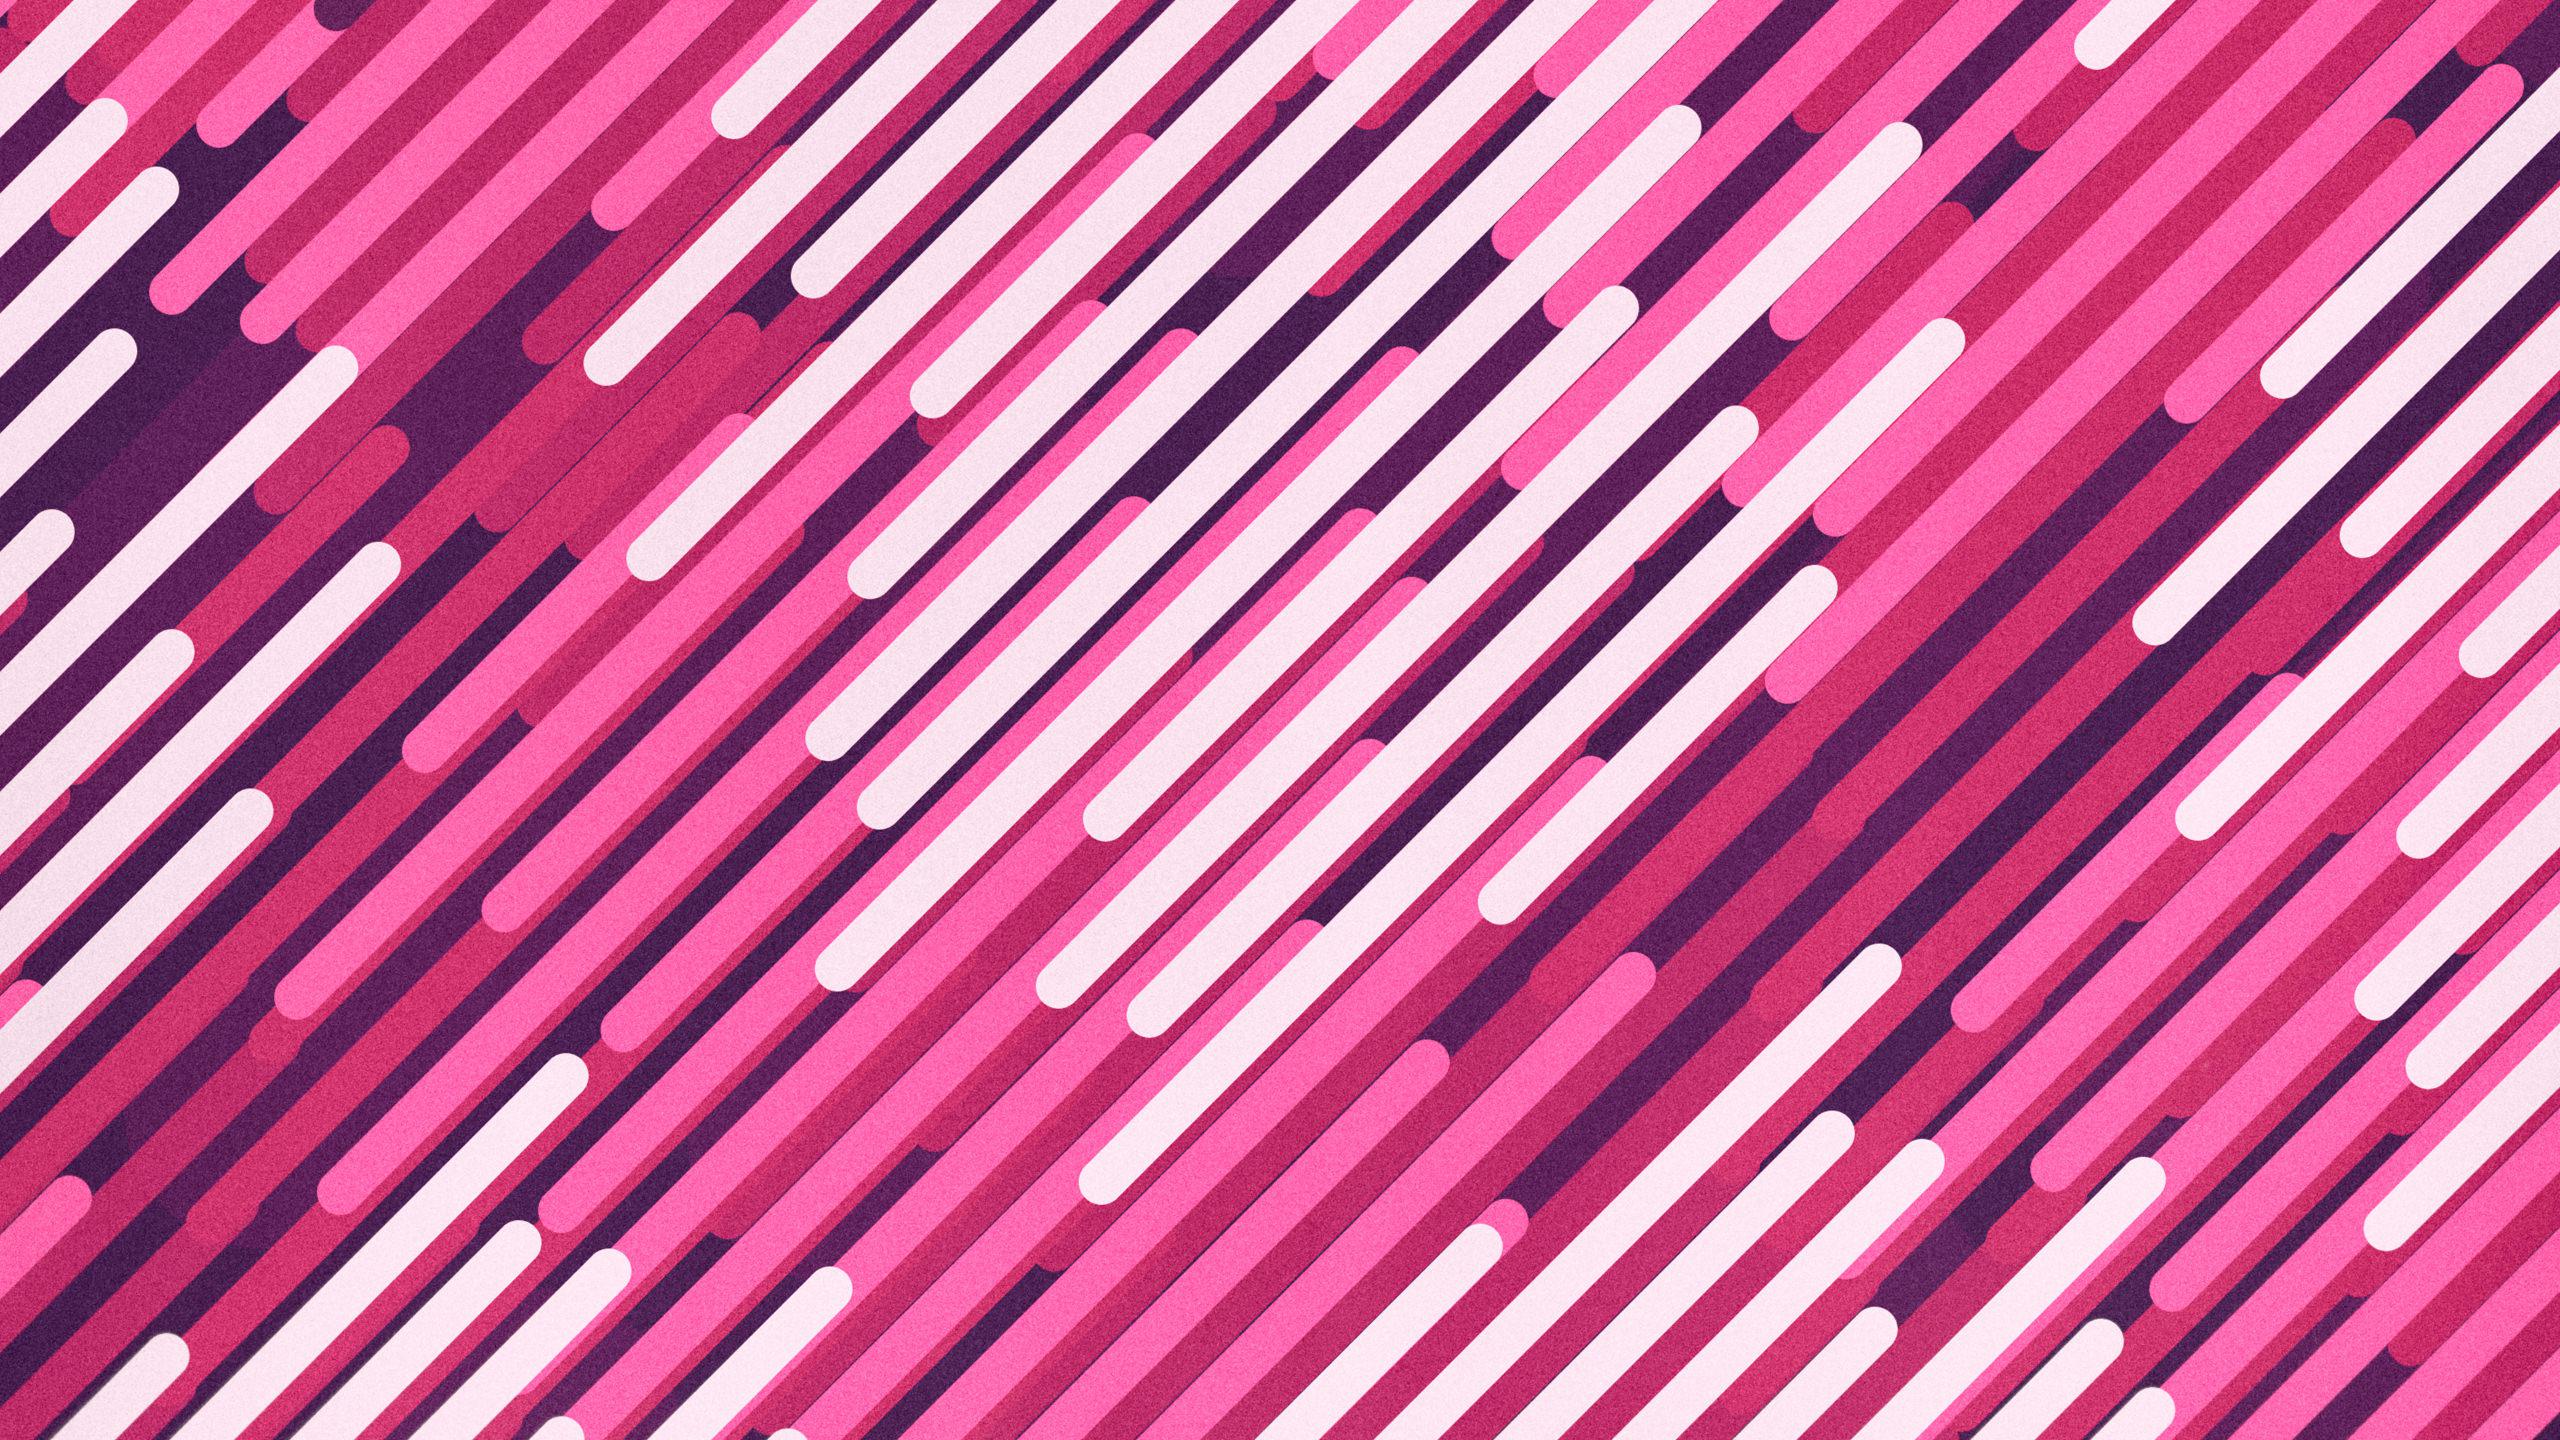 4k Wallpaper Pink